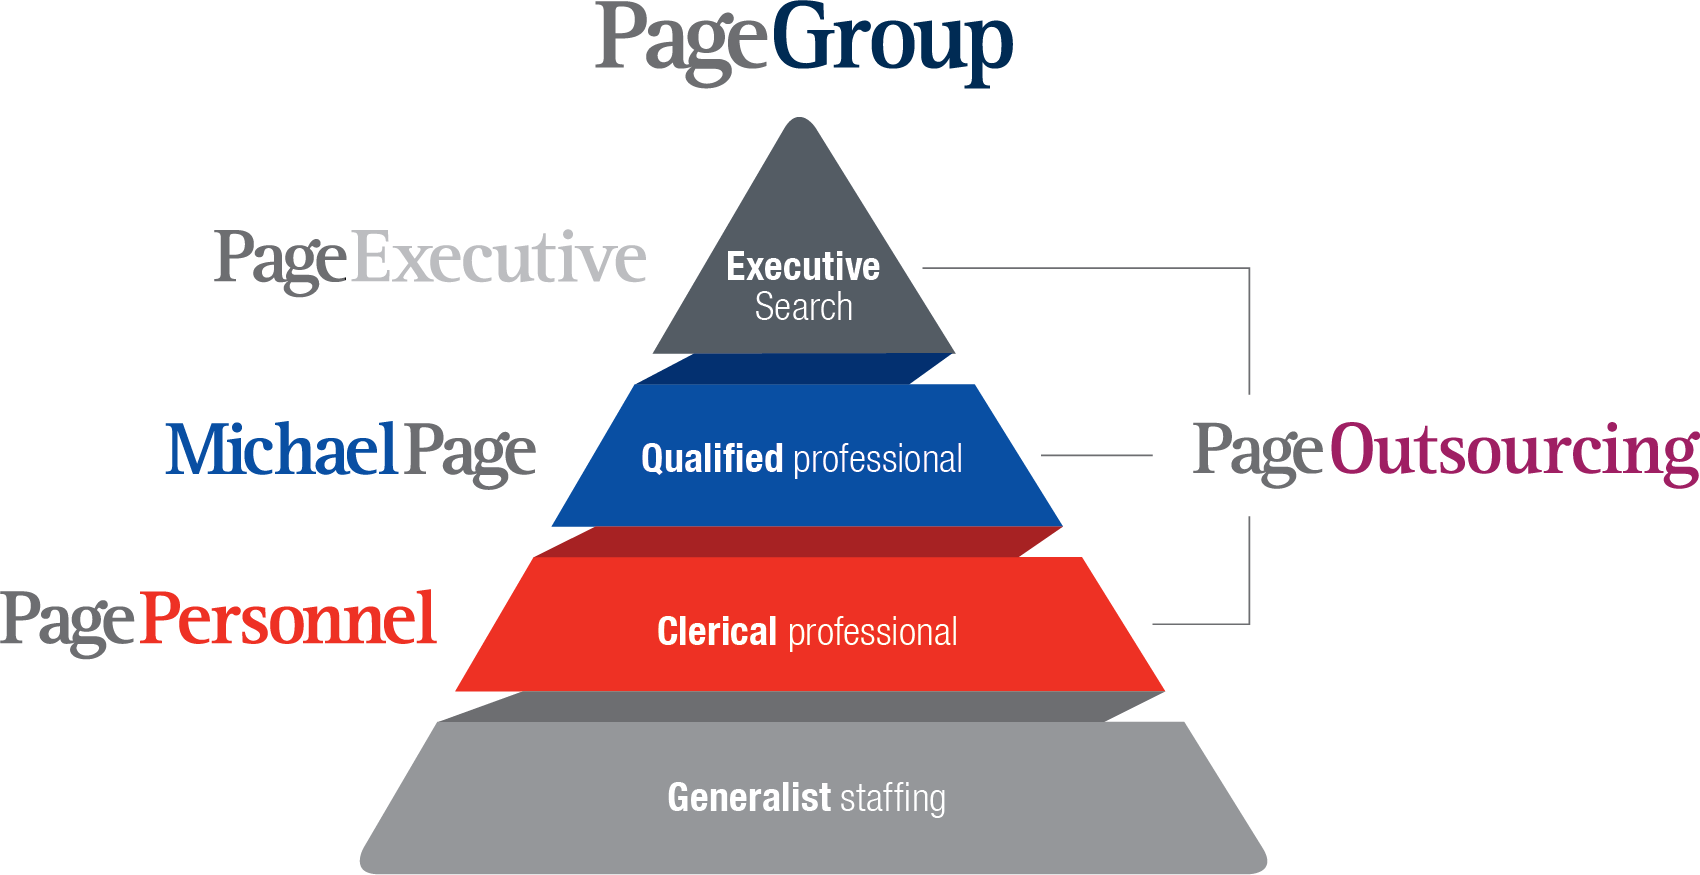 pg-brand-pyramid-2017.png